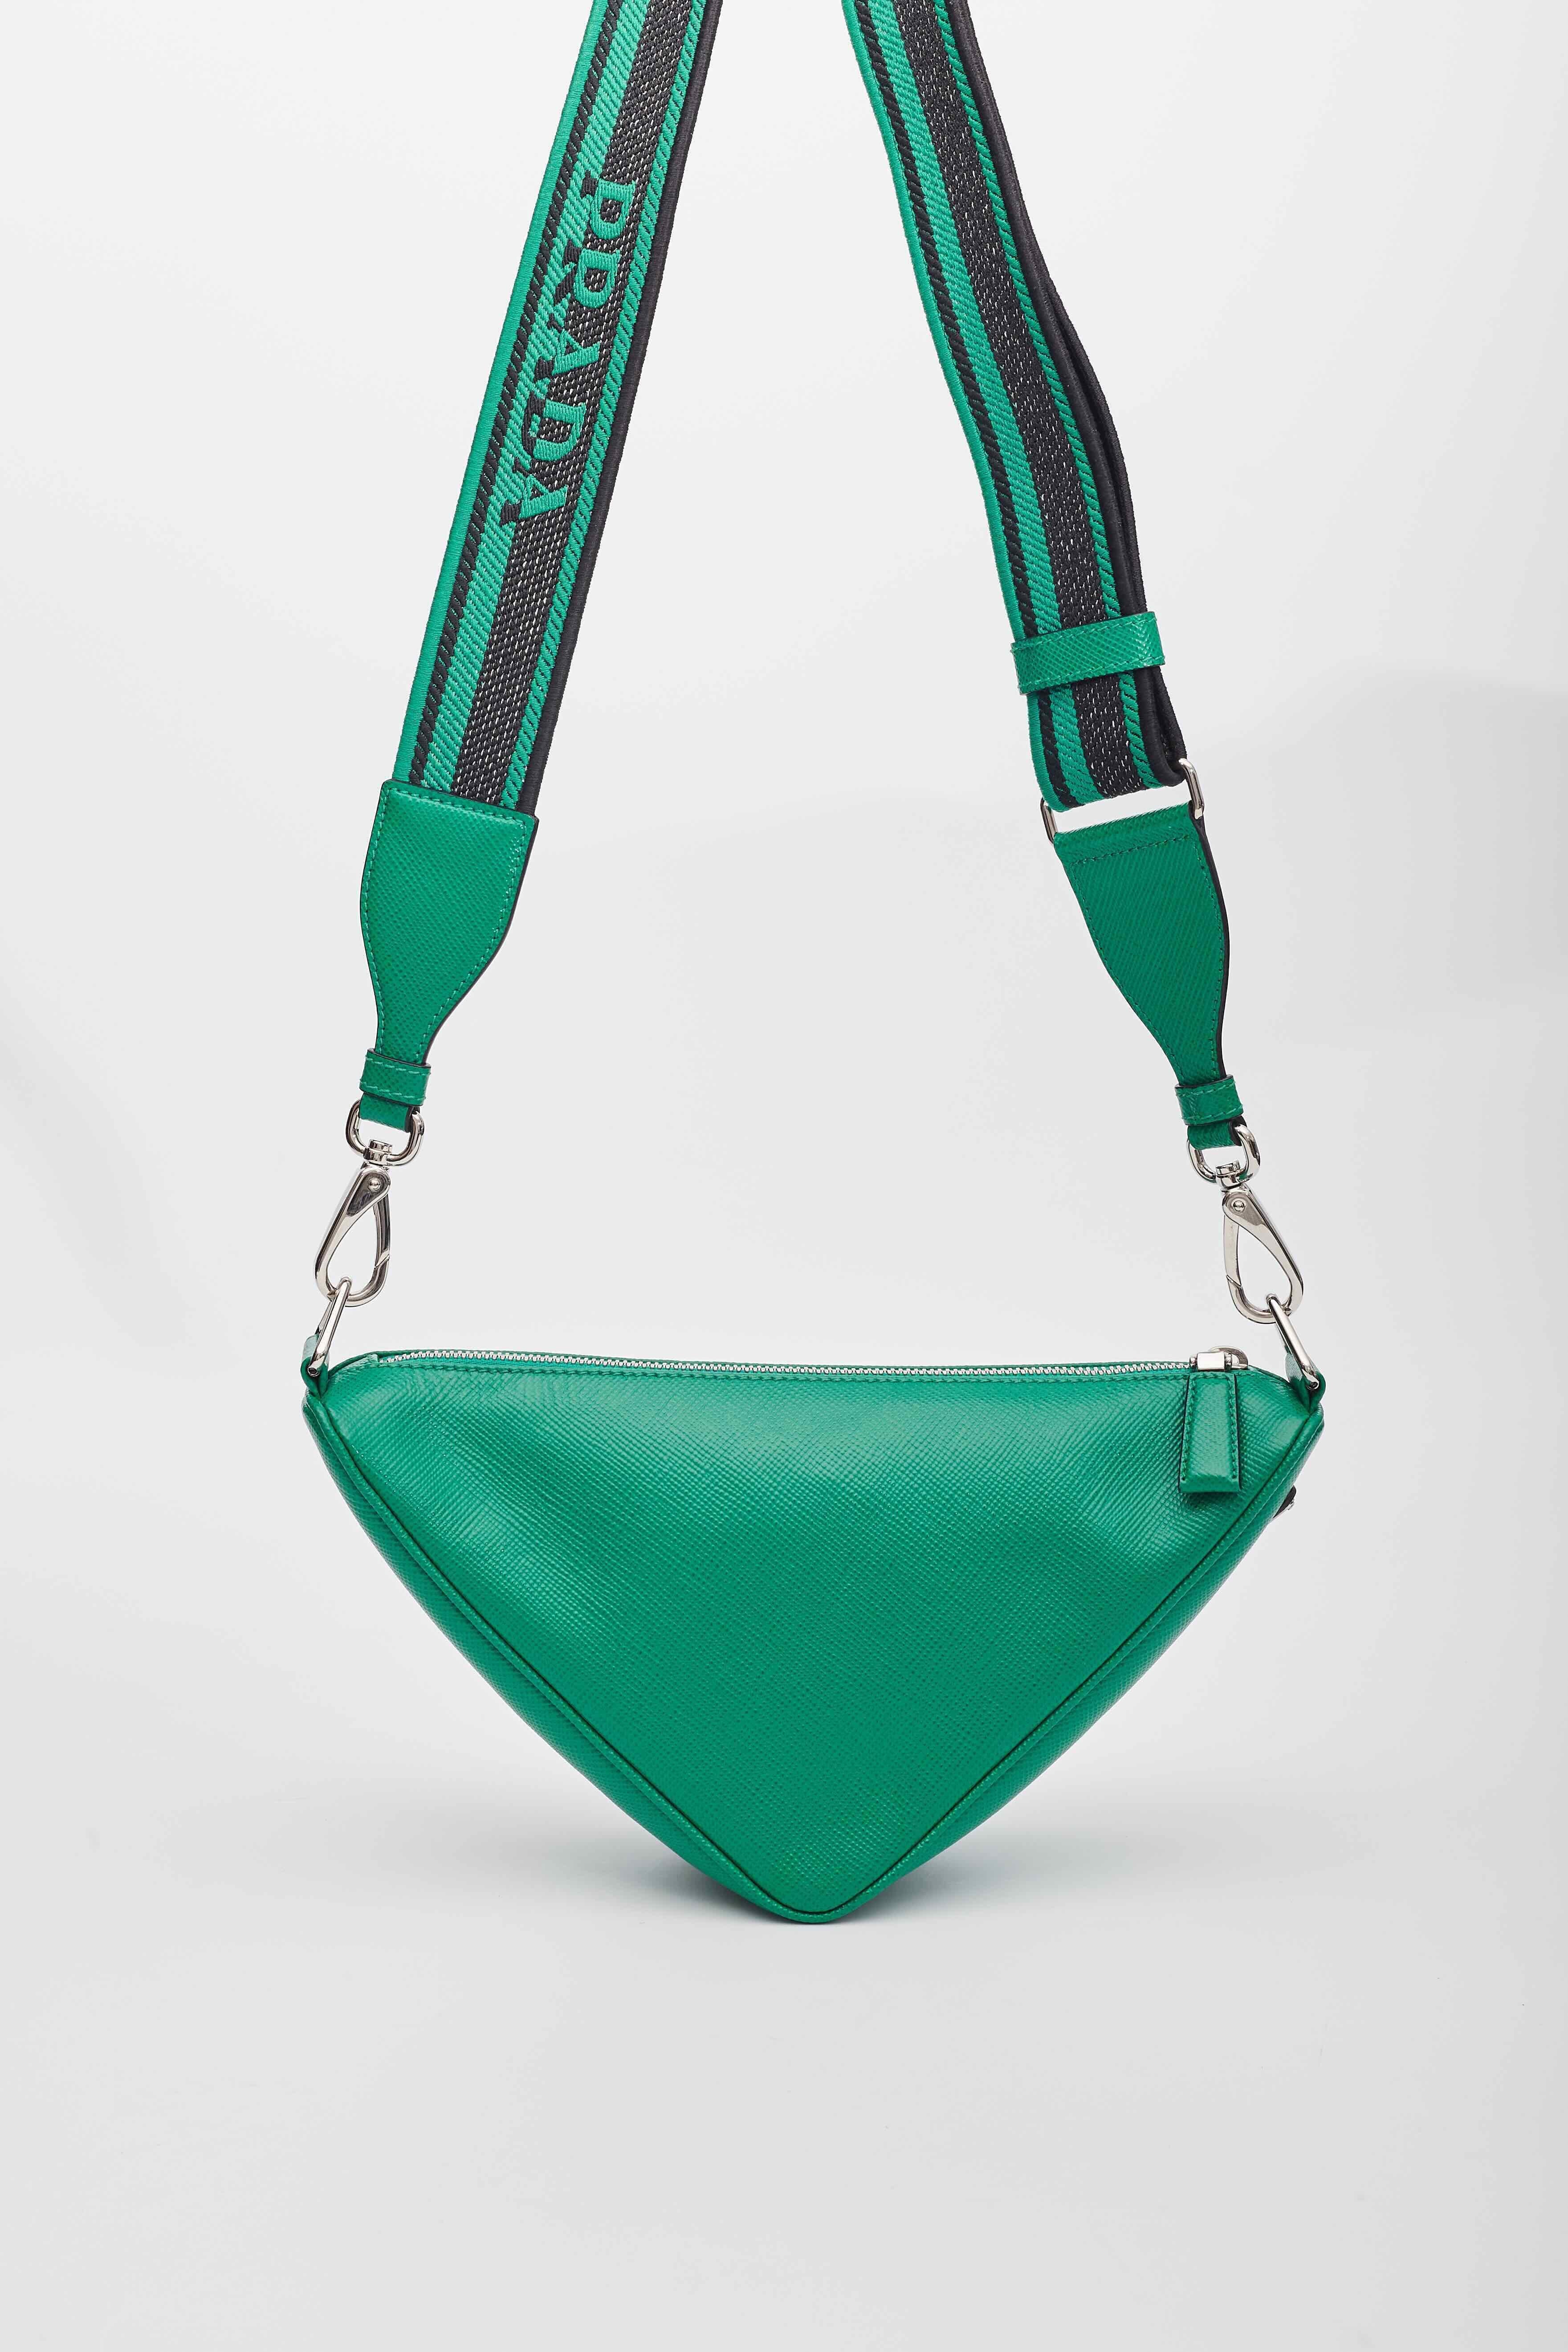 Prada Saffiano Leather Mango Green Triangle Logo Pouch Bag For Sale 7